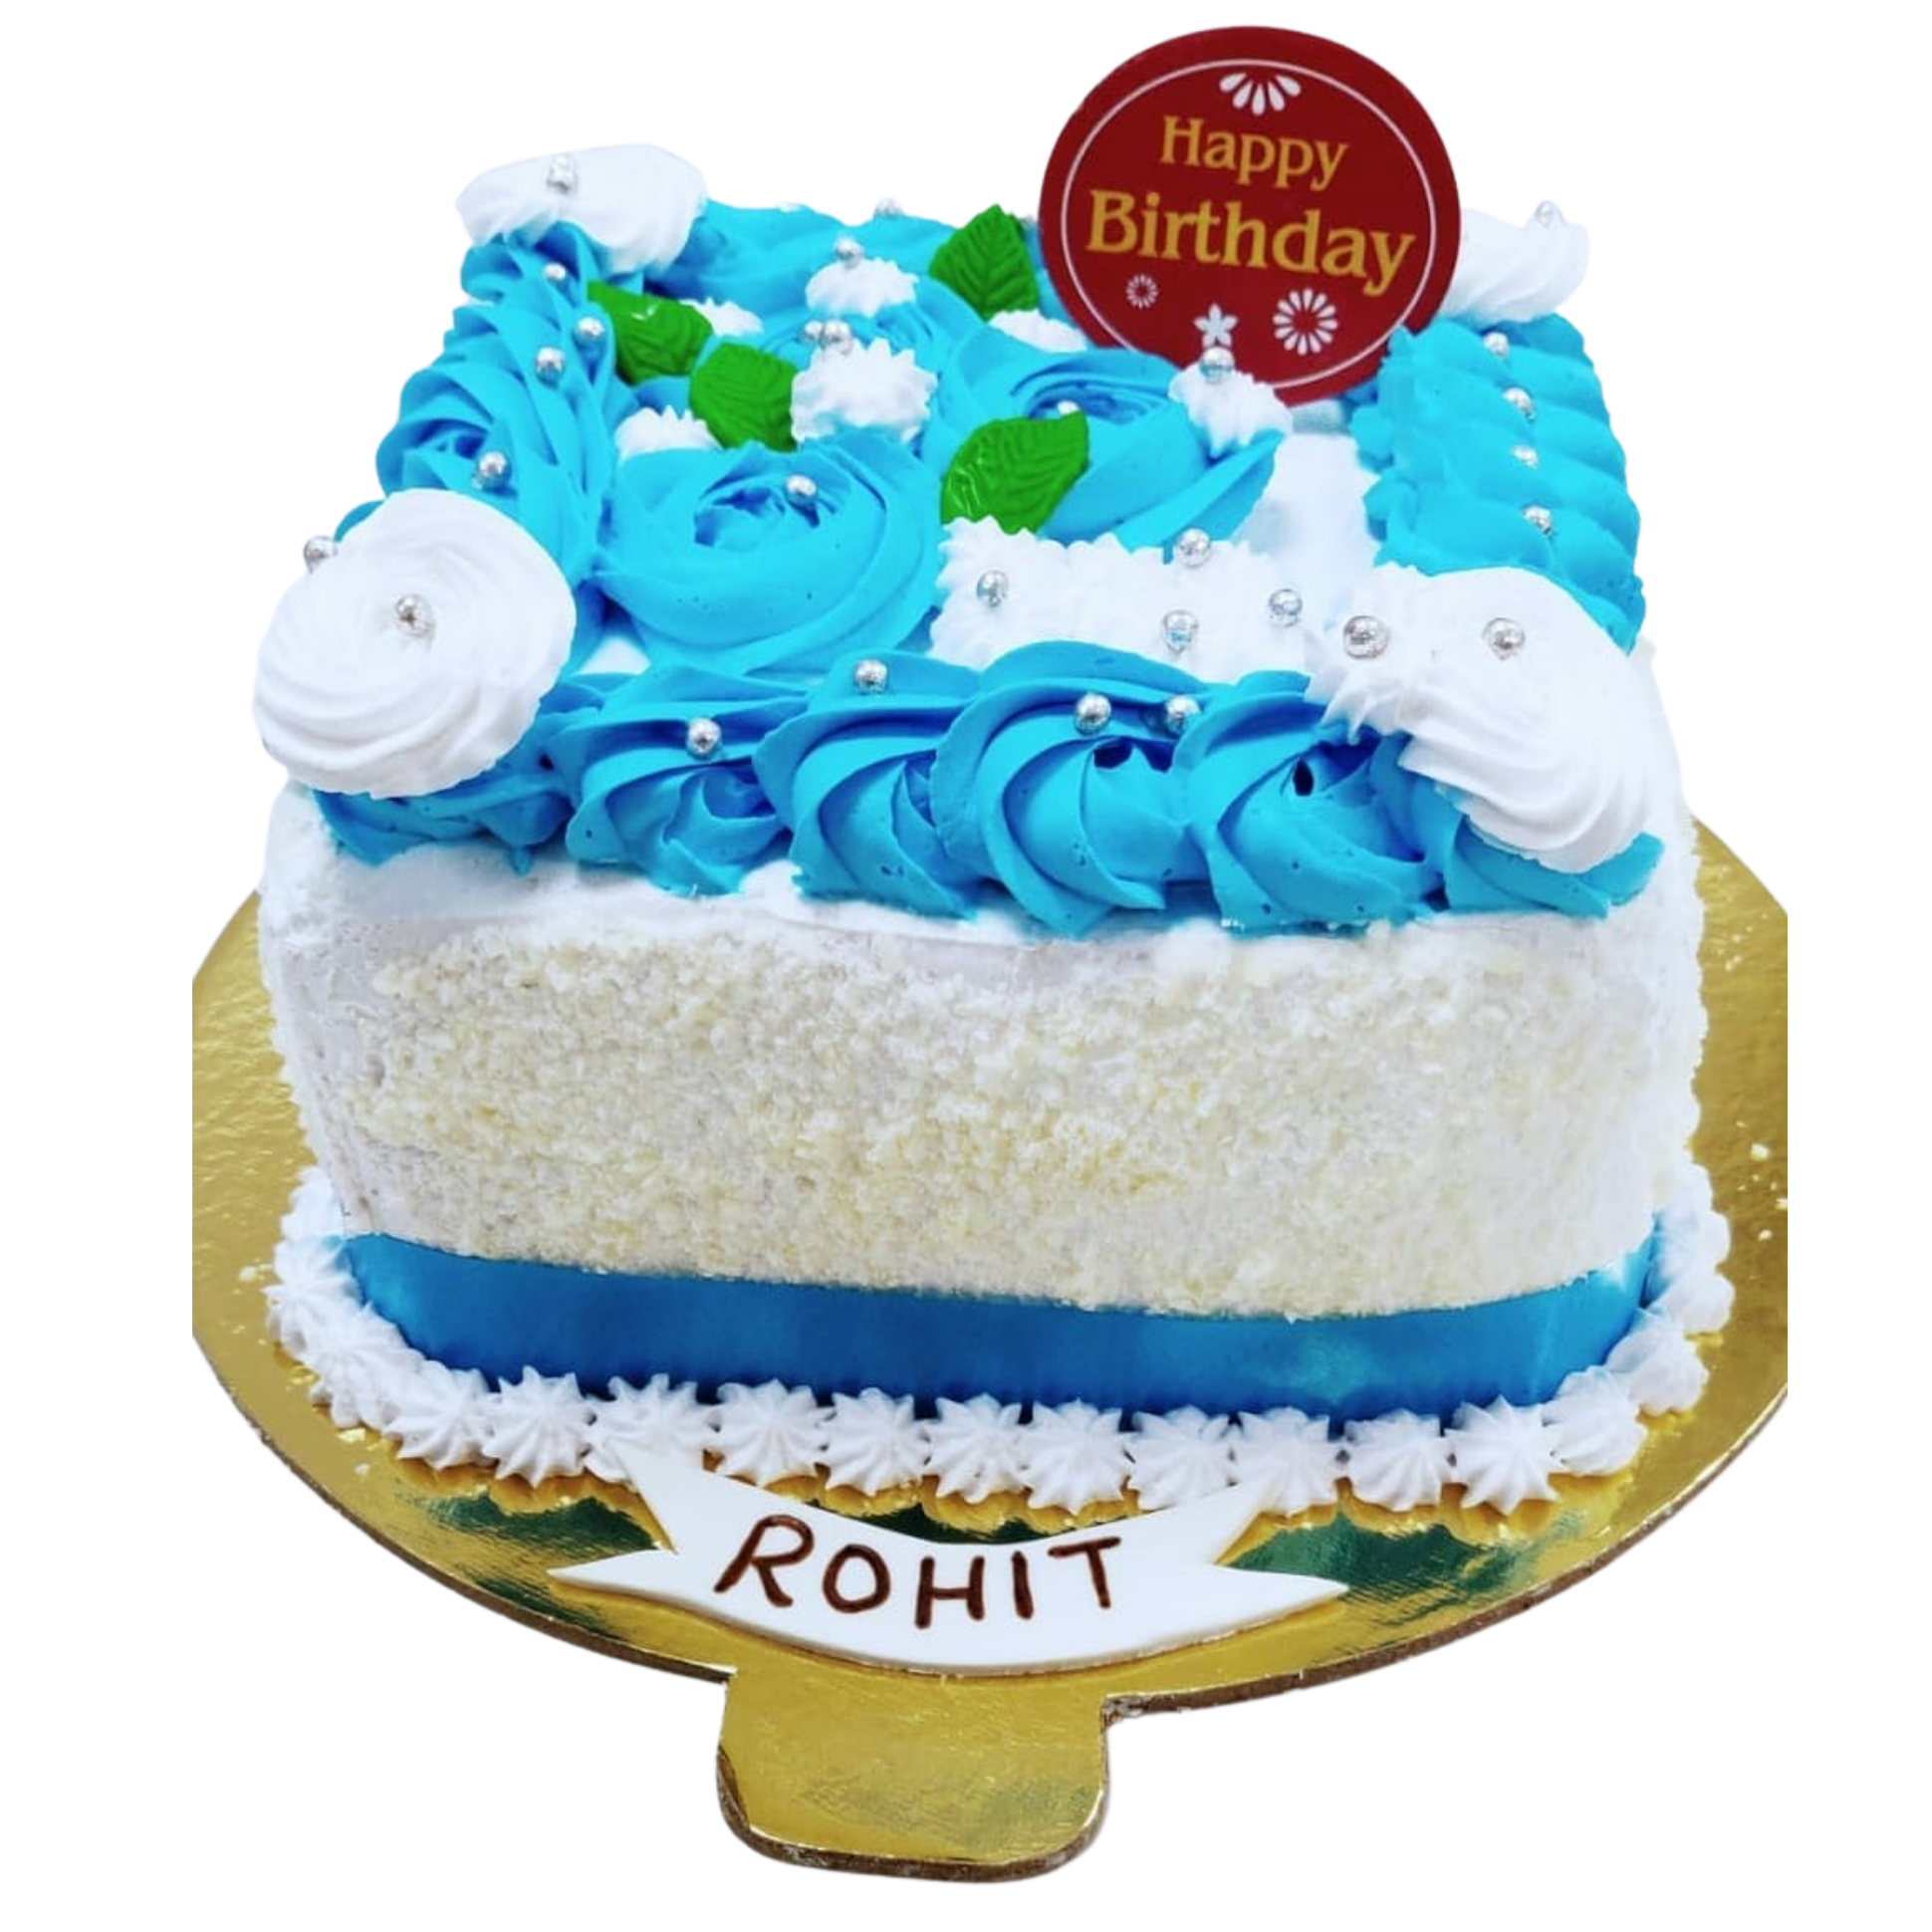 Blue floral Birthday Cake online delivery in Noida, Delhi, NCR,
                    Gurgaon